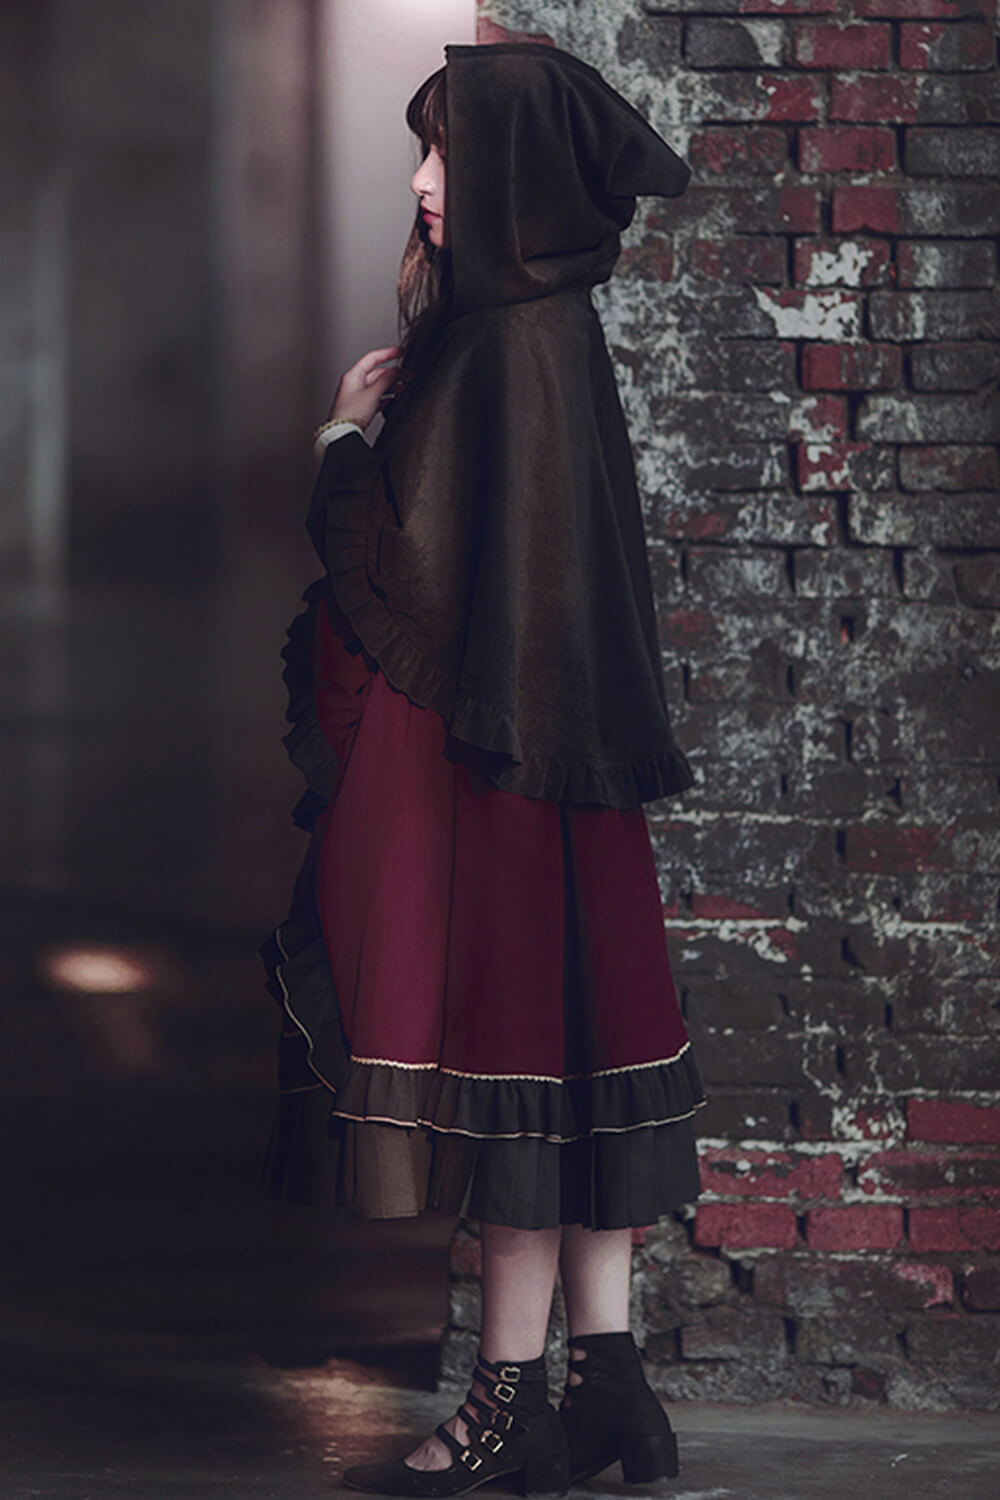 Dark Academia Magician Burgundy Dress With Cloak Hood